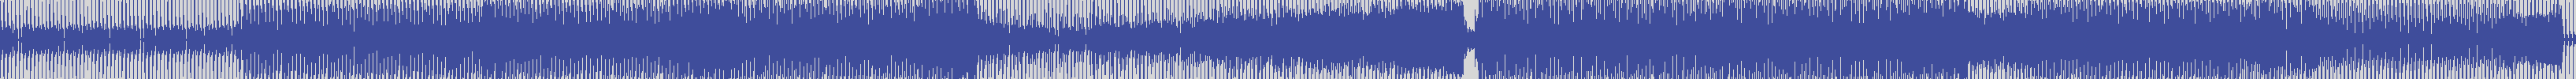 nf_boyz_records [NFY075] Mandragora - Classic Vee [Kabalistic Mix] audio wave form